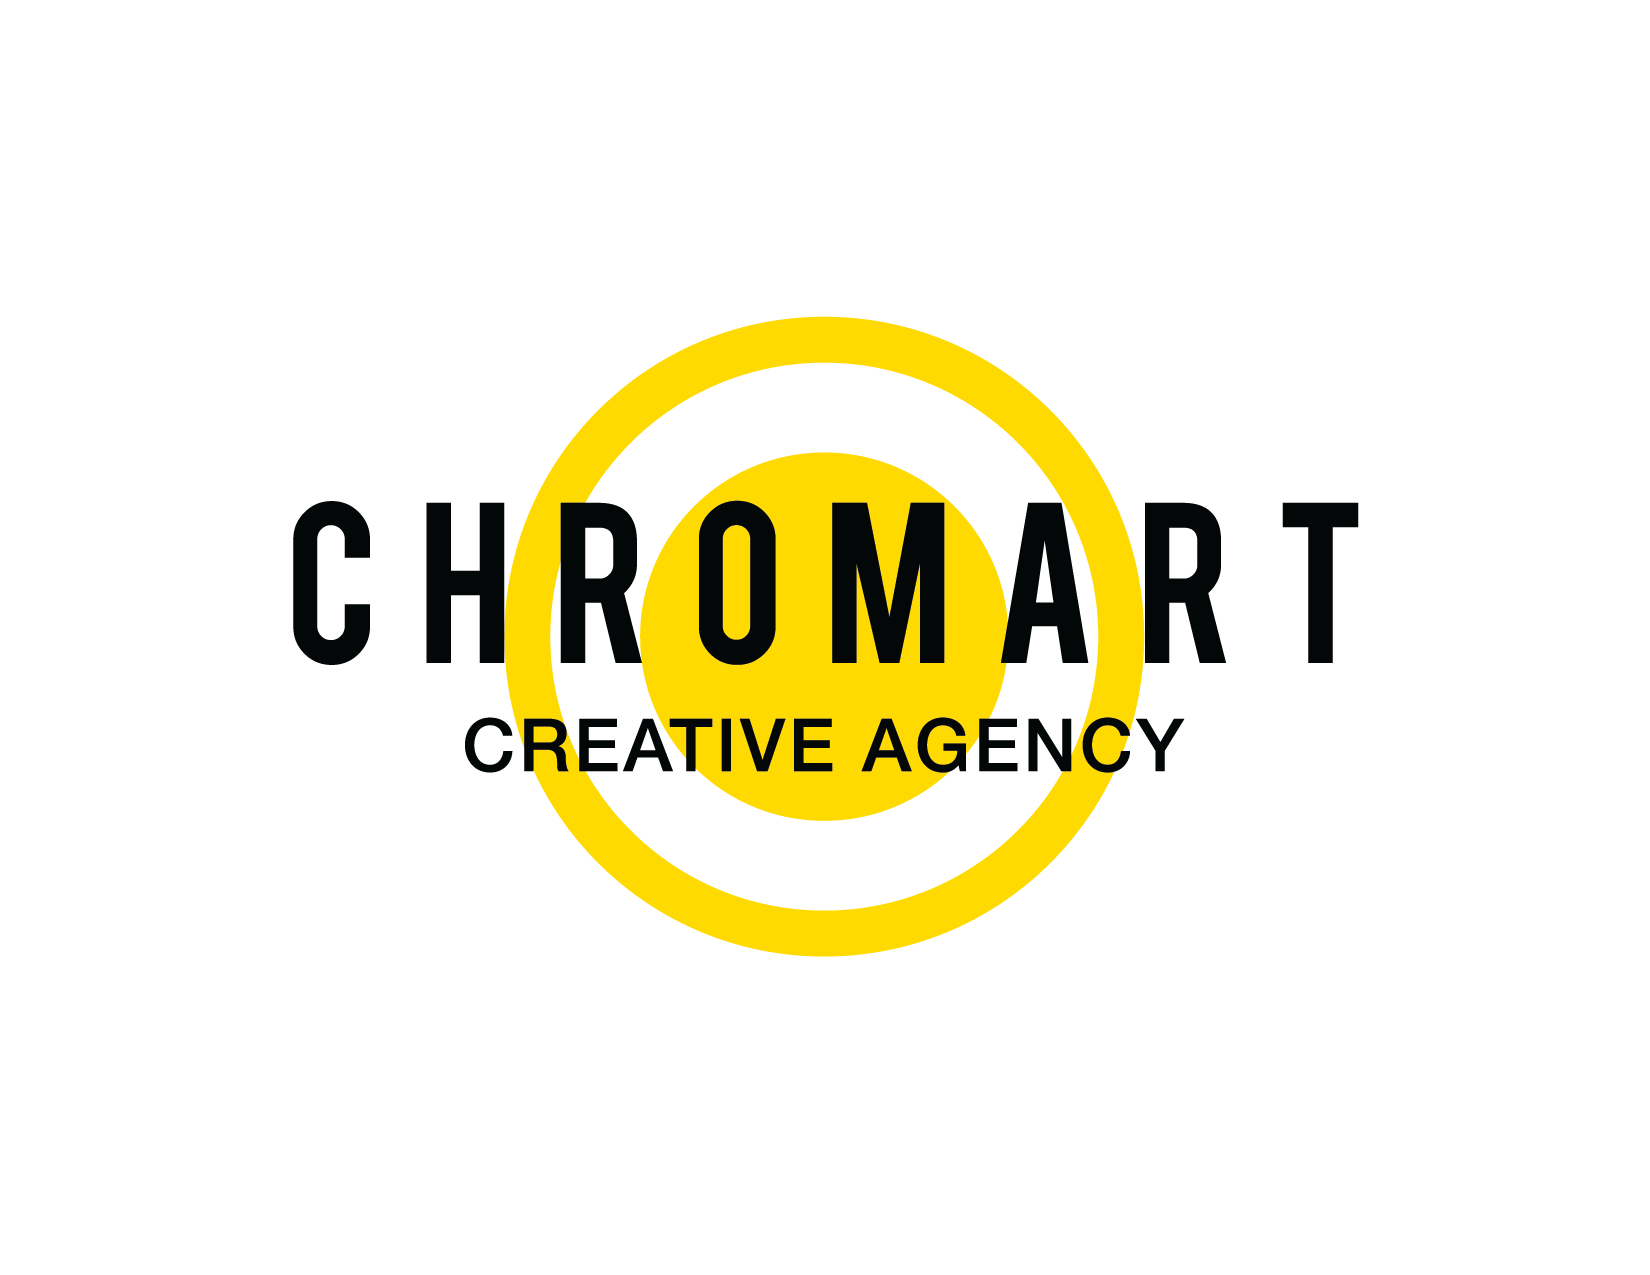 Chromart Creative Agency logo